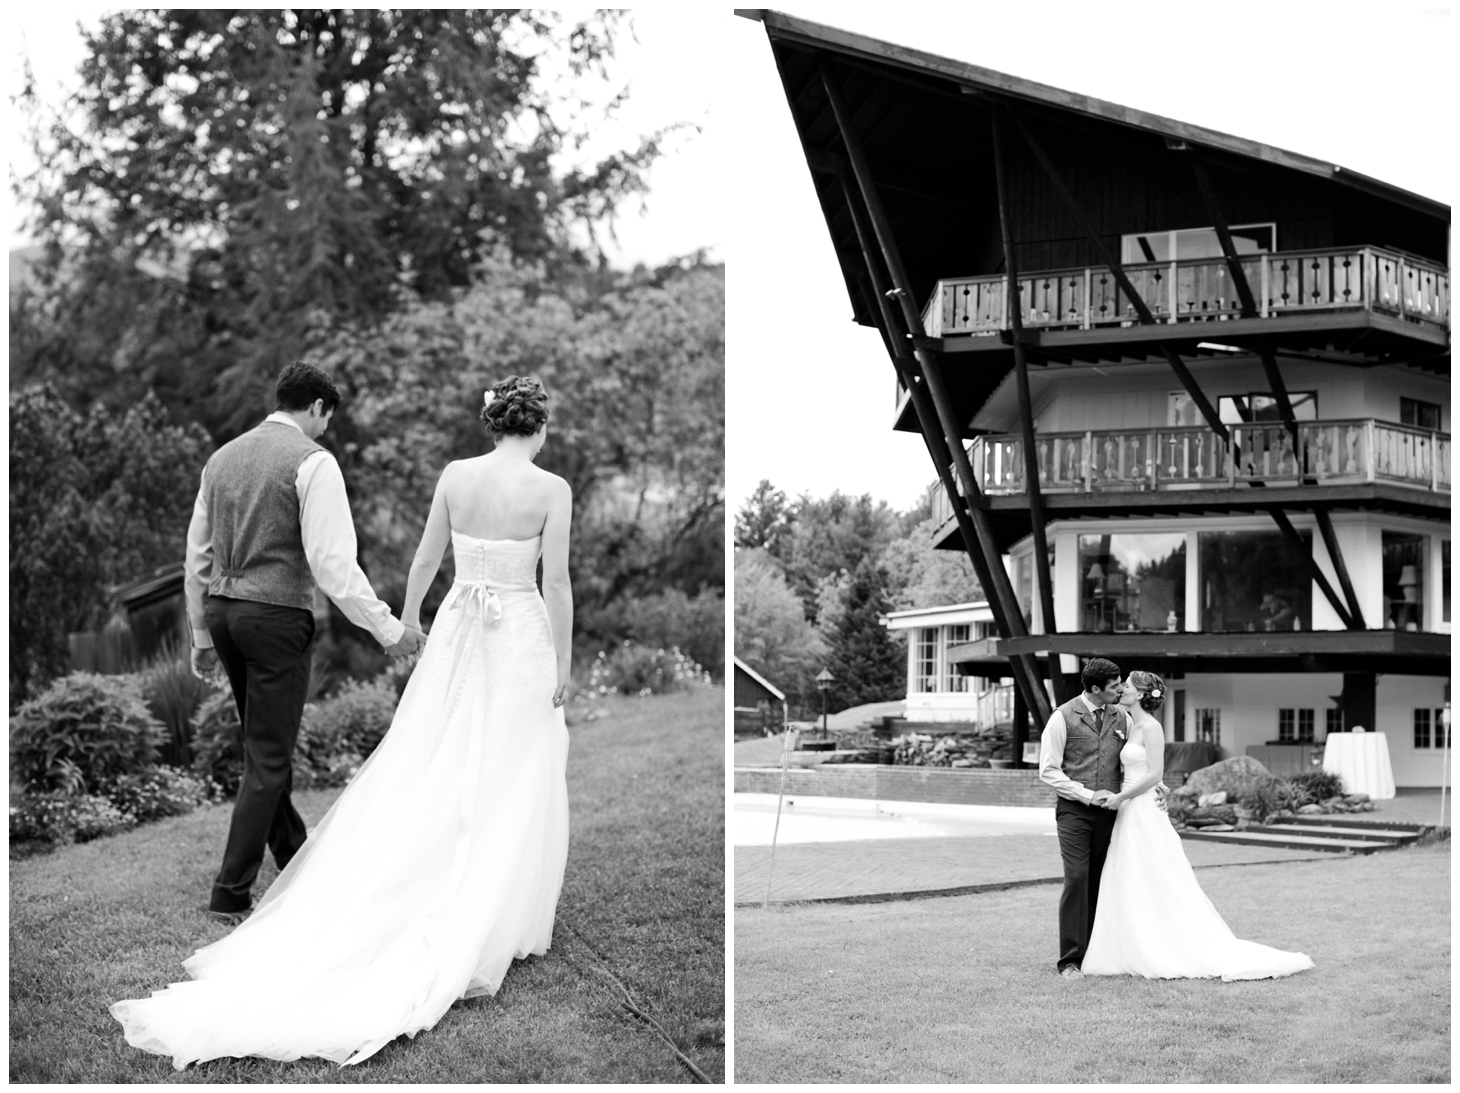 Kris & Christine's Mountain-Inspired Vermont Lodge Wedding - by Sarah Bradshaw Photography_0030